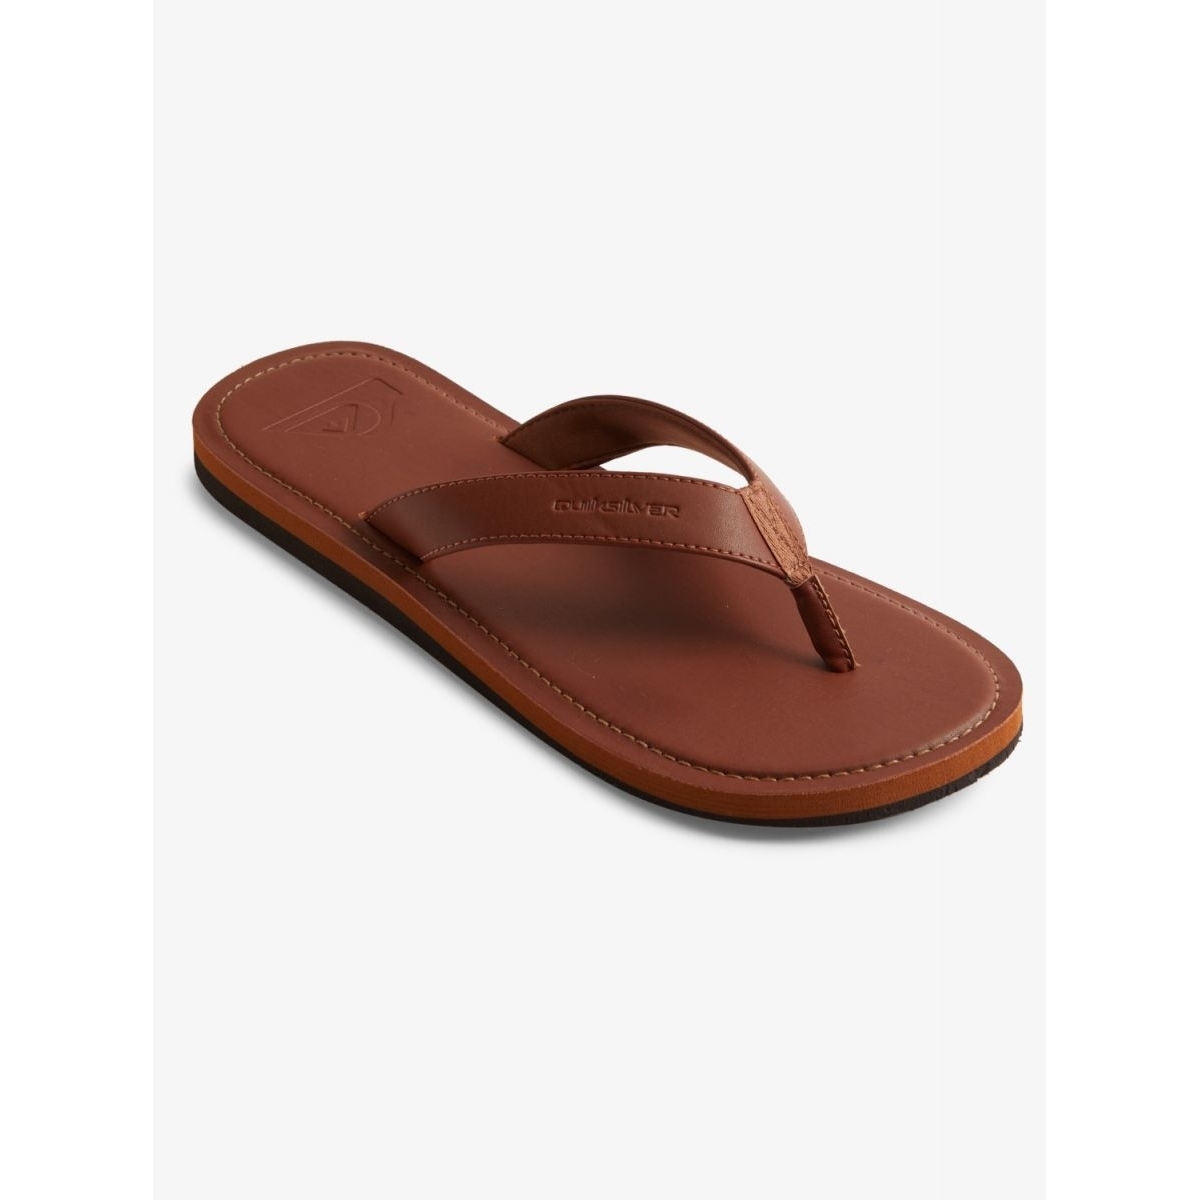 Quiksilver Men's Molokai Nubuck Flip Flop Sandals Tan Solid - AQYL100960-TKD0 TAN SOLID - TAN SOLID, 6